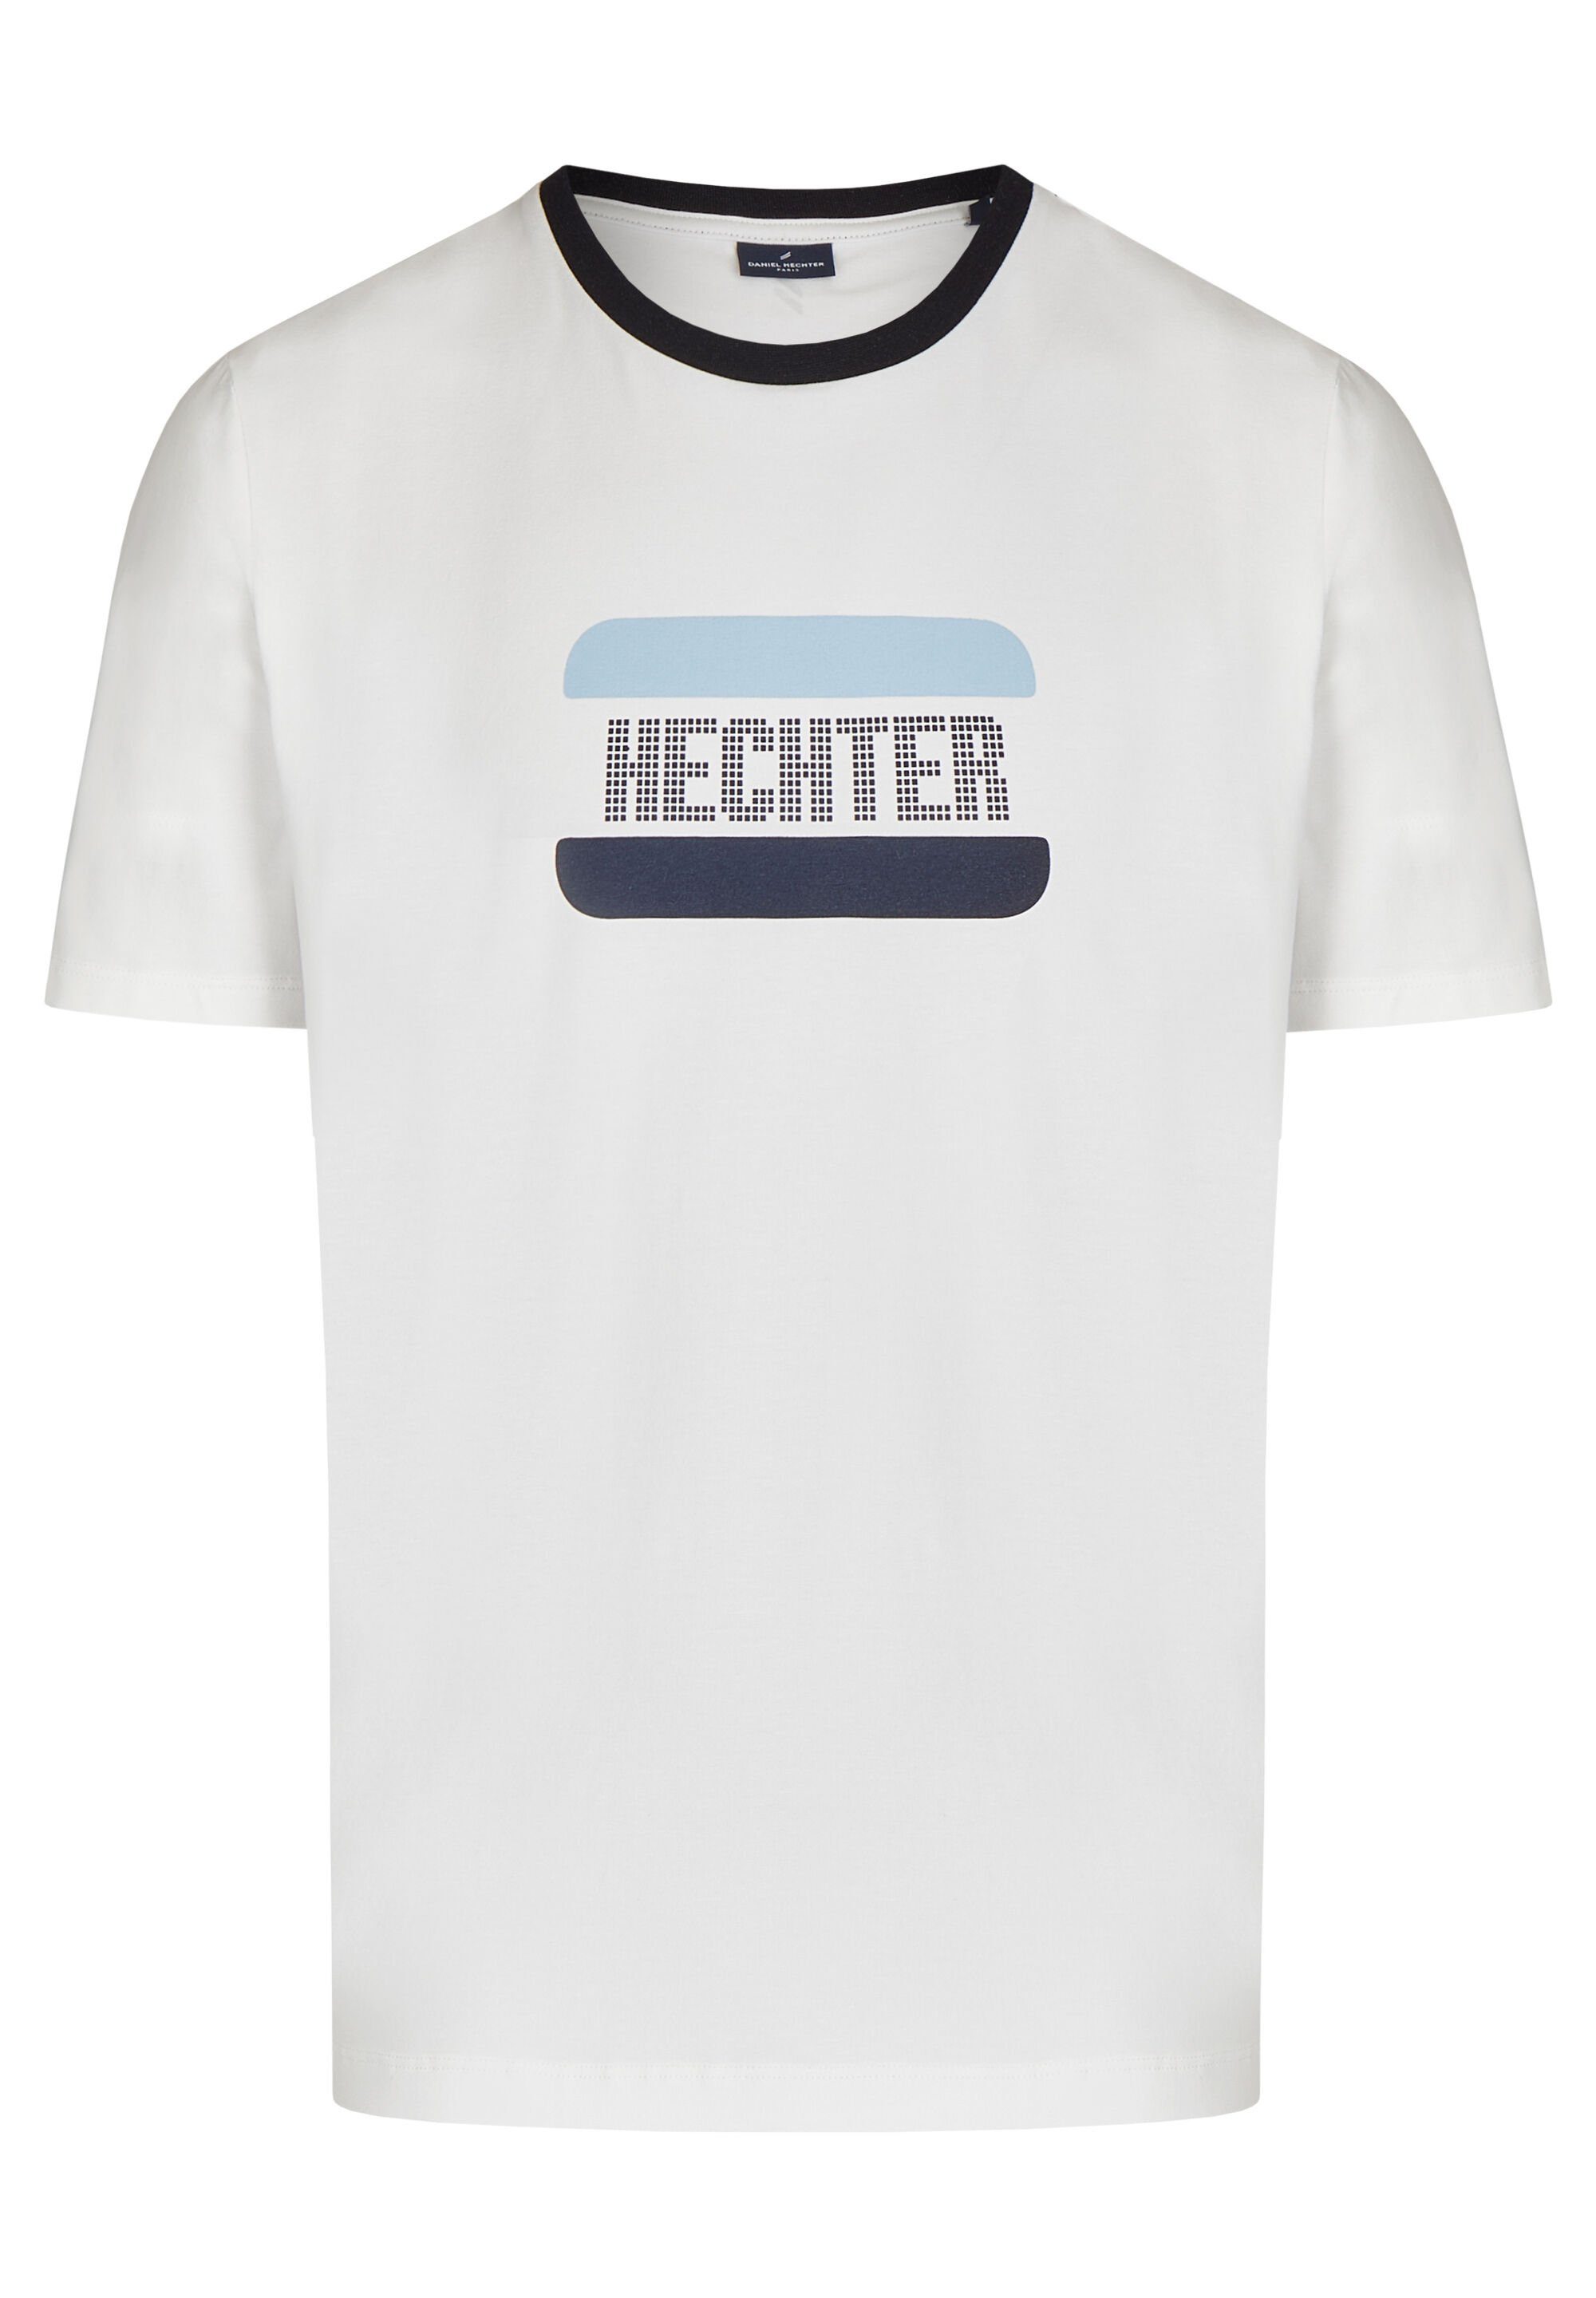 HECHTER PARIS T-Shirt mit Iconic Print